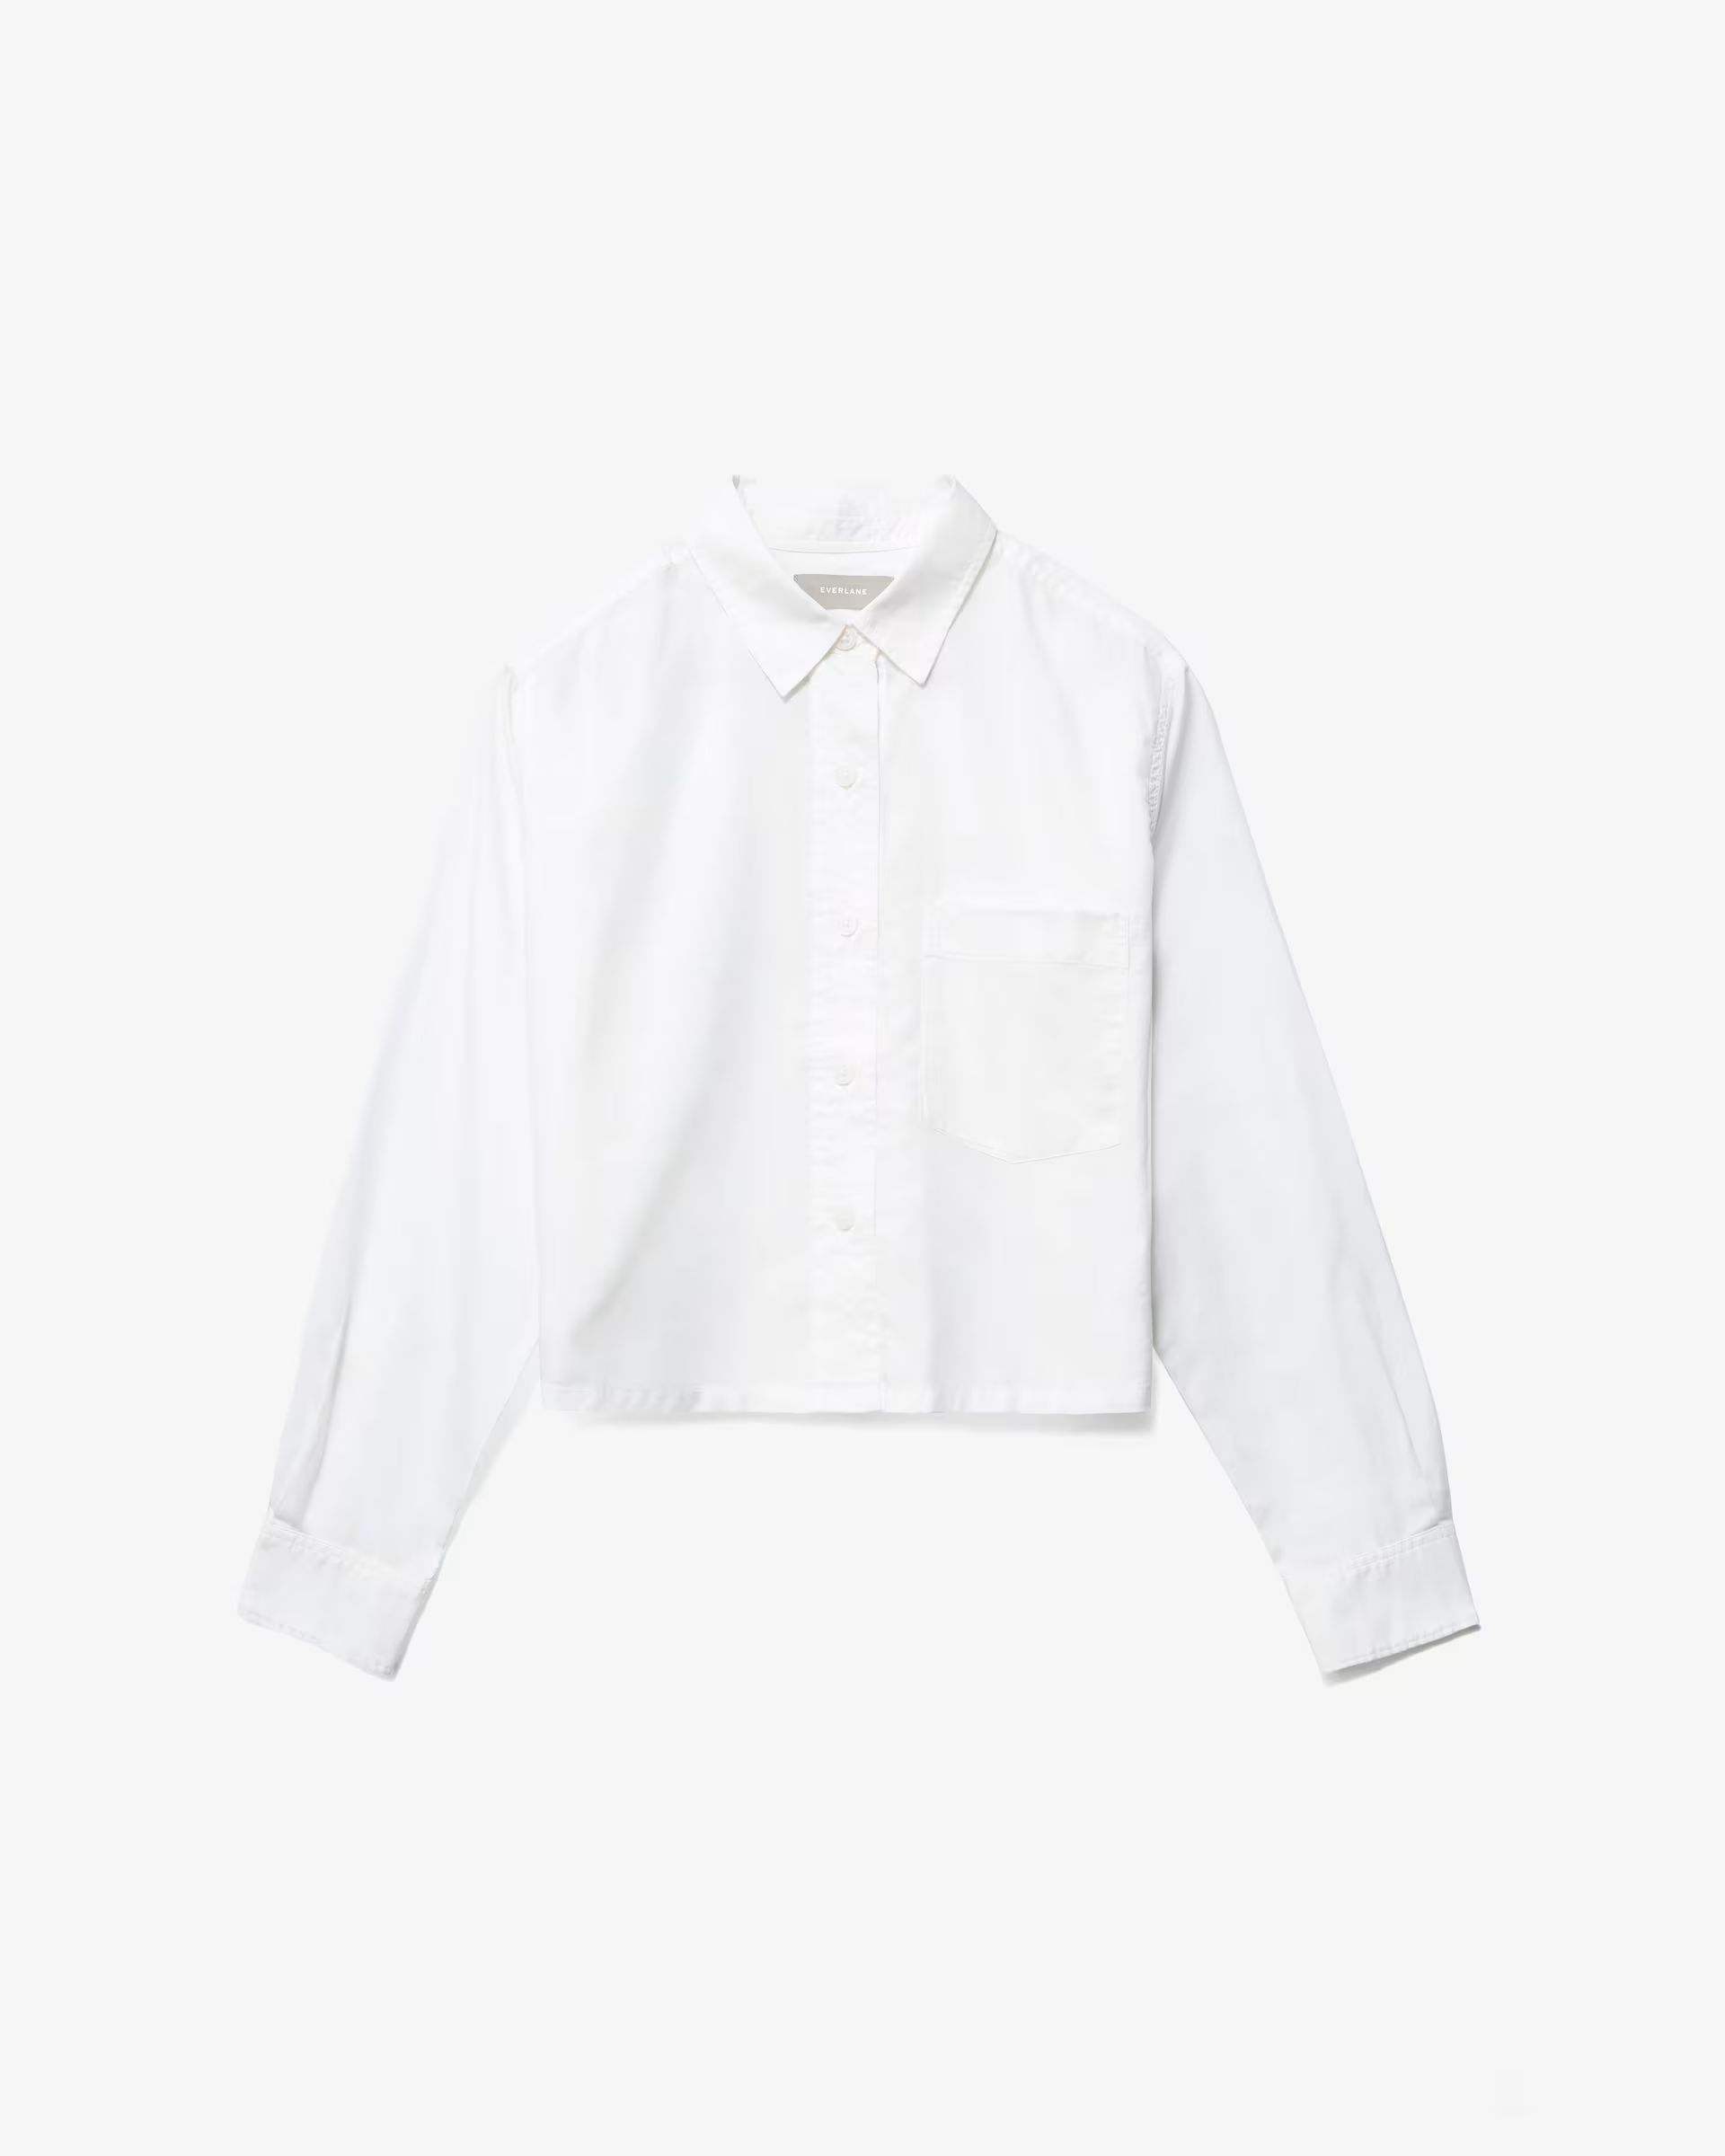 The Silky Cotton Way-Short Shirt | Everlane